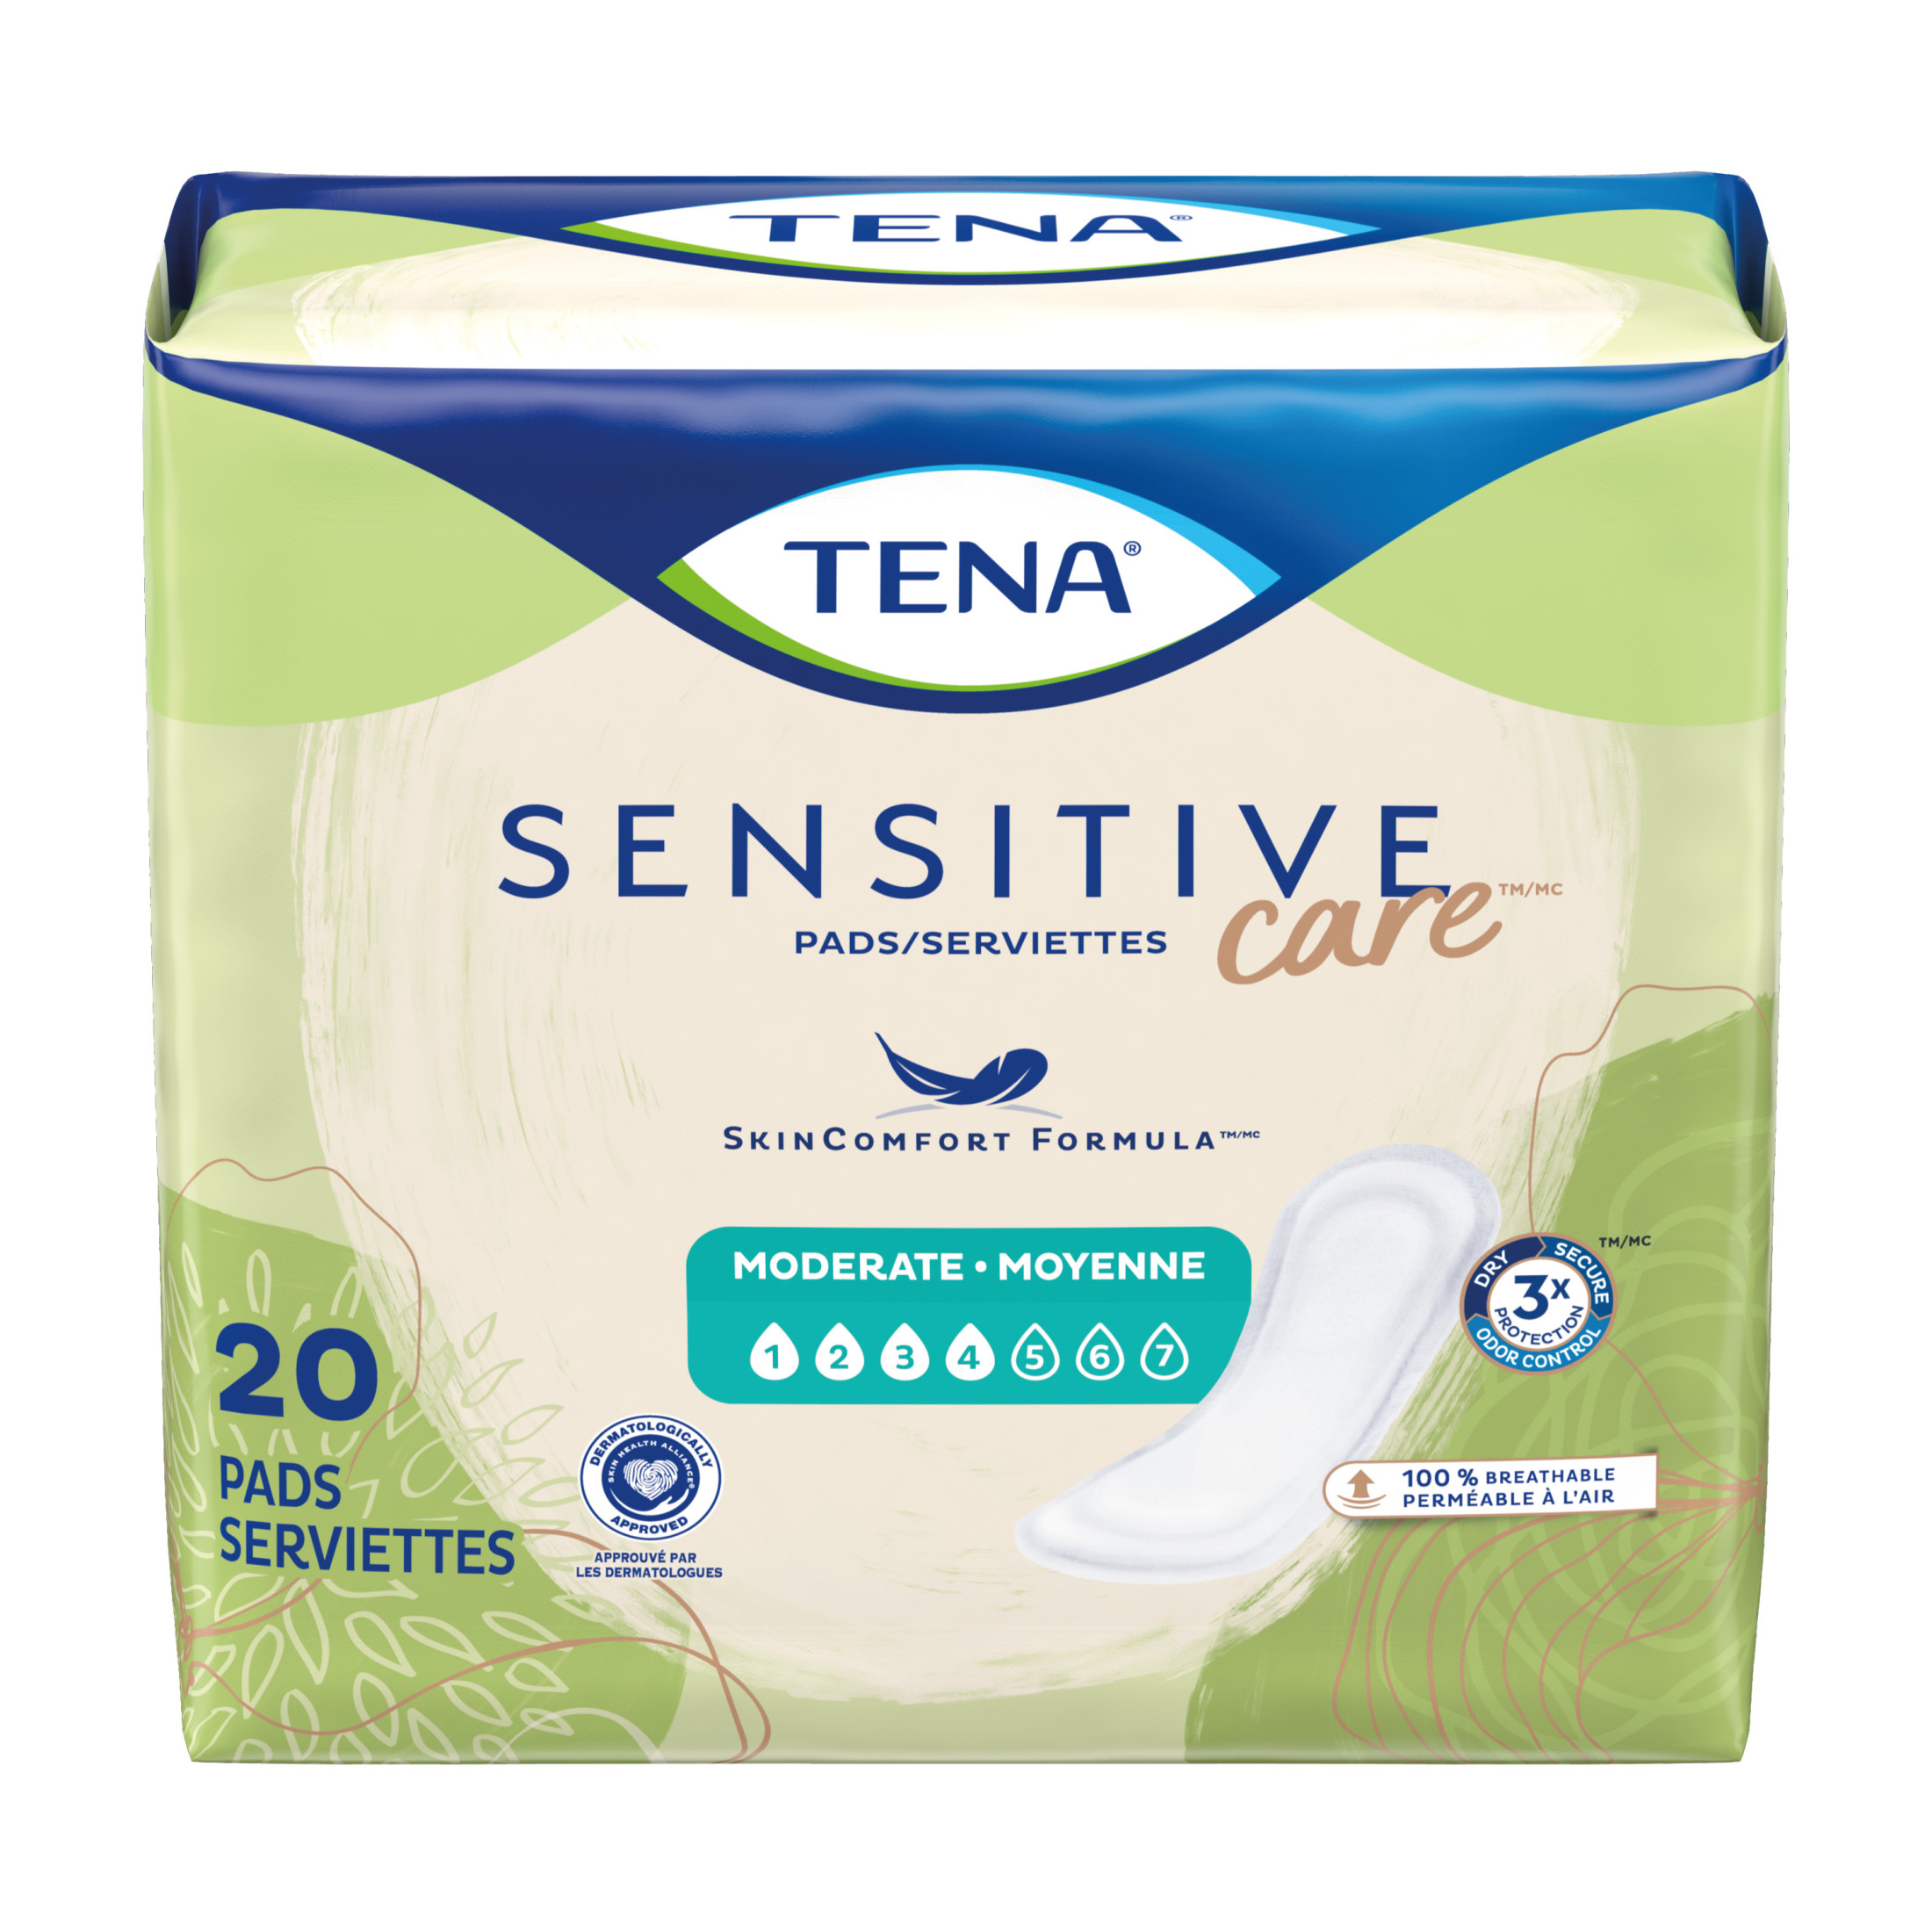 TENA Sensitive Care Moderate Regular Length Incontinence Pad, 20 Ct - image 2 of 7